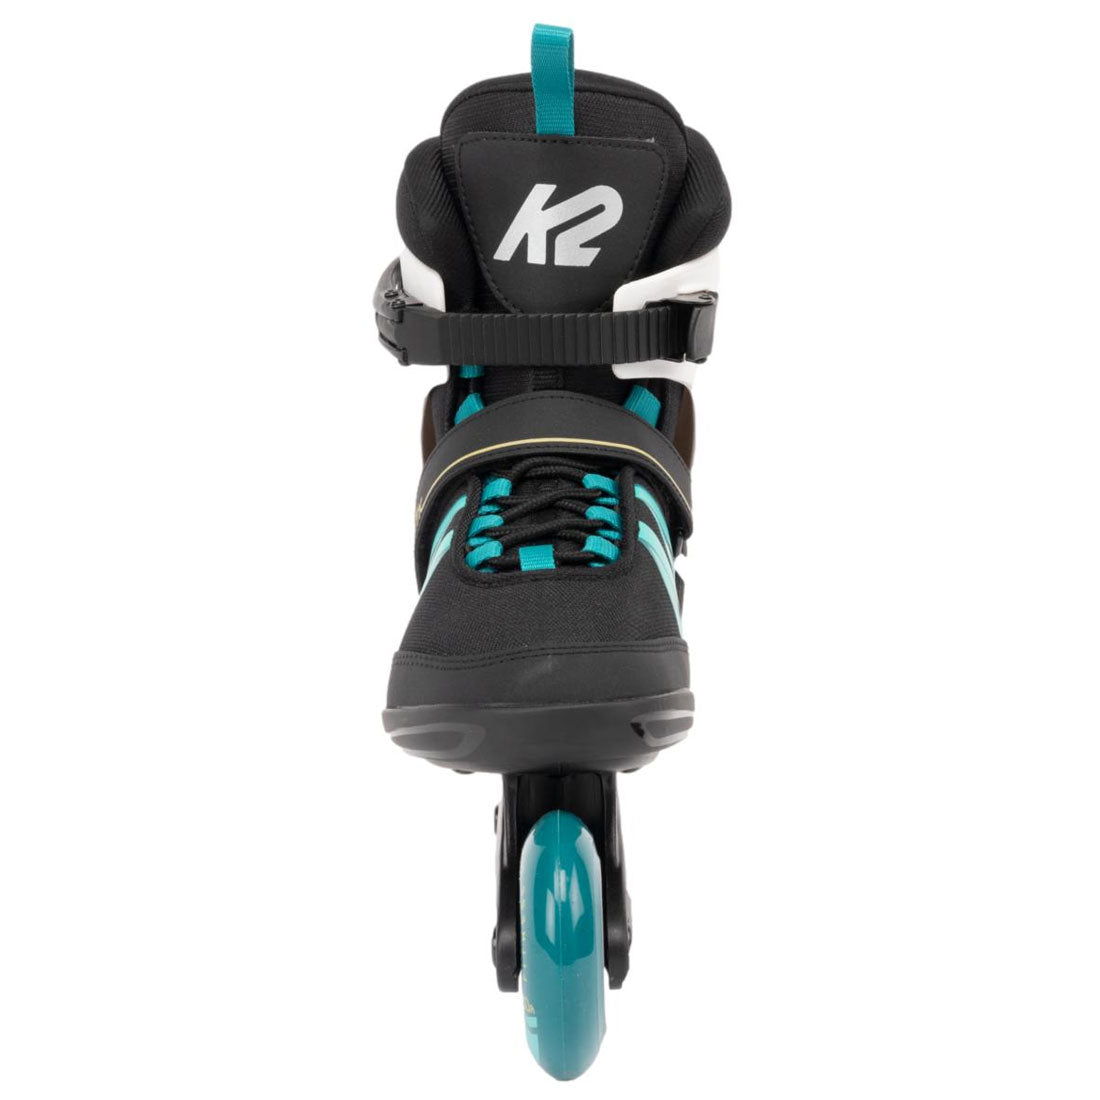 K2 Kinetic 80 W Black/Turquoise Inline Rec Skates